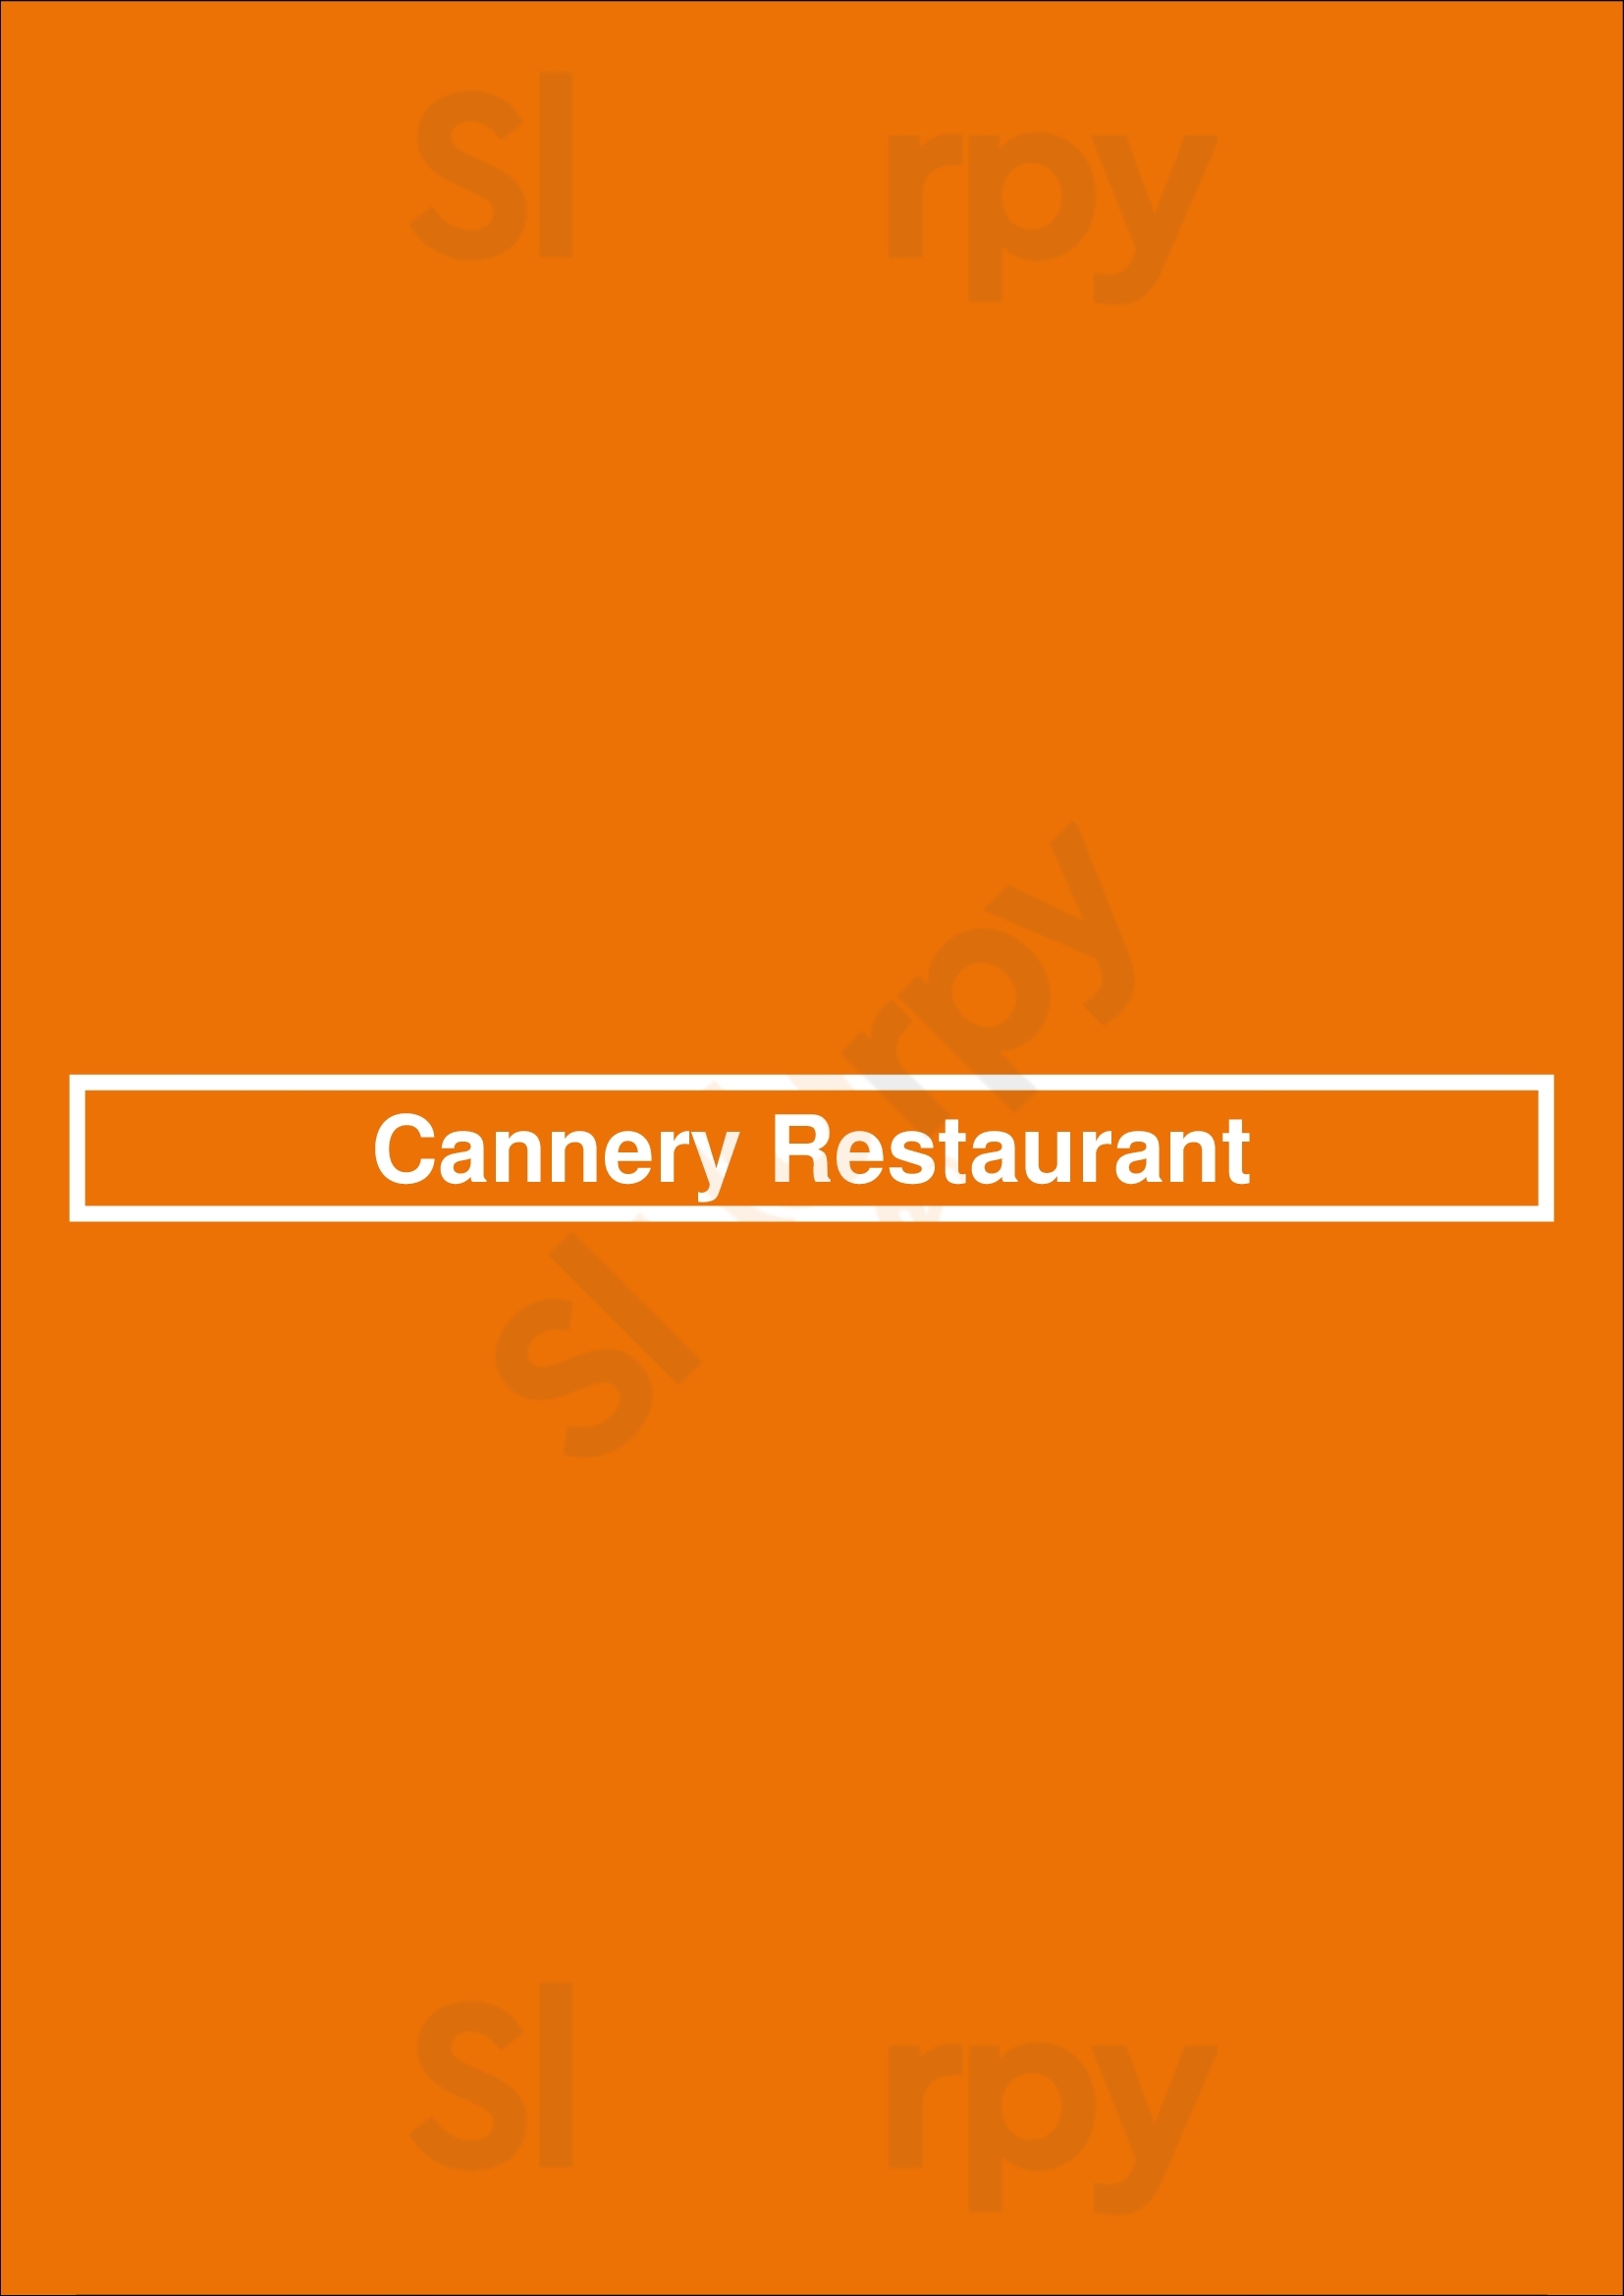 Cannery Restaurant Niagara-on-the-Lake Menu - 1